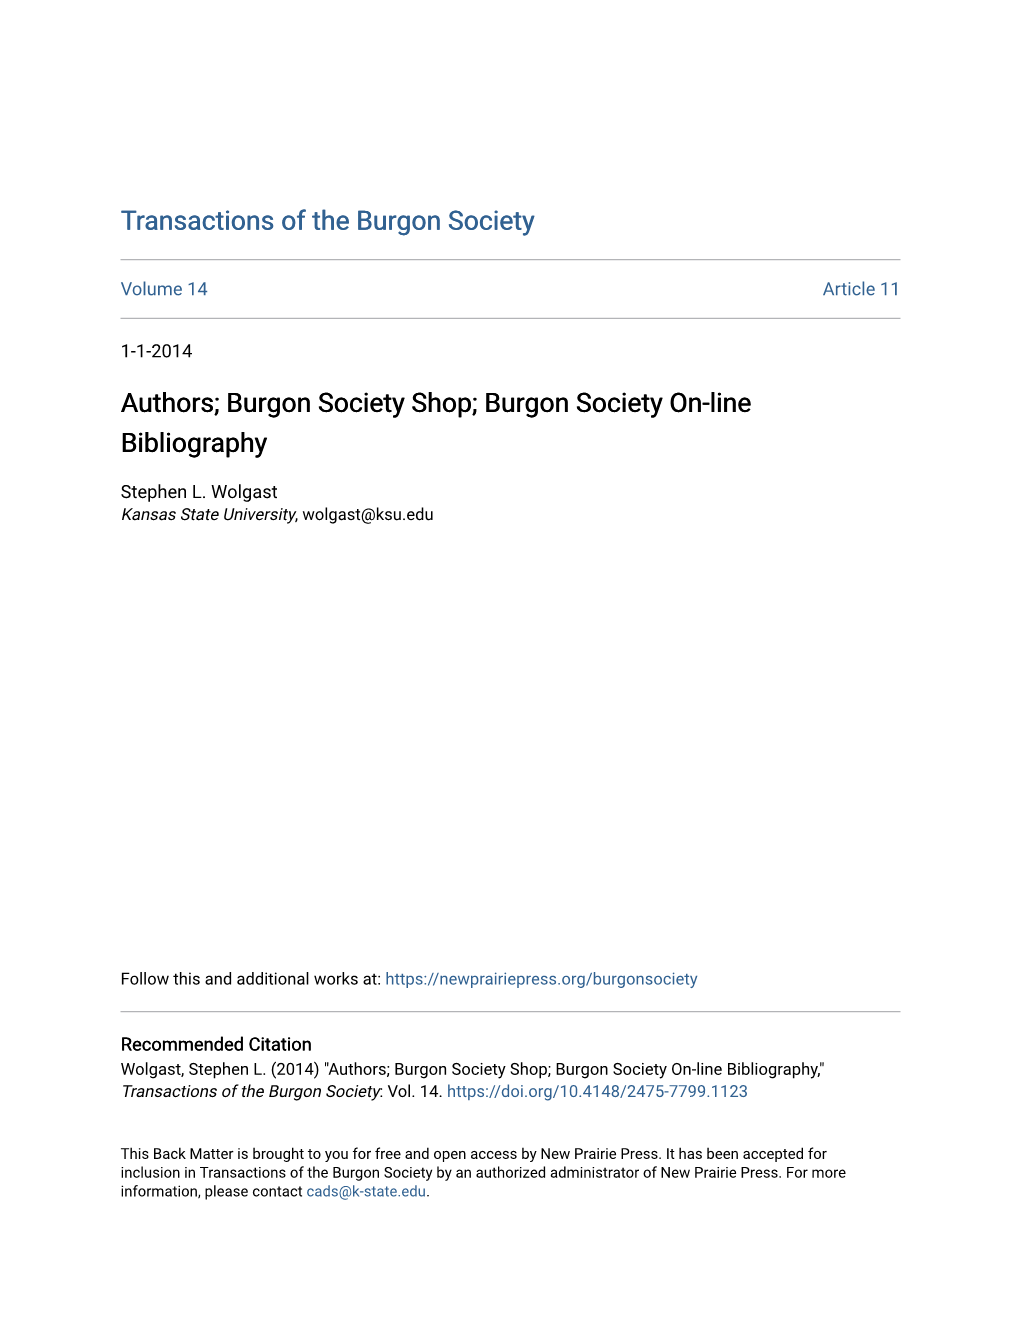 Burgon Society Shop; Burgon Society On-Line Bibliography